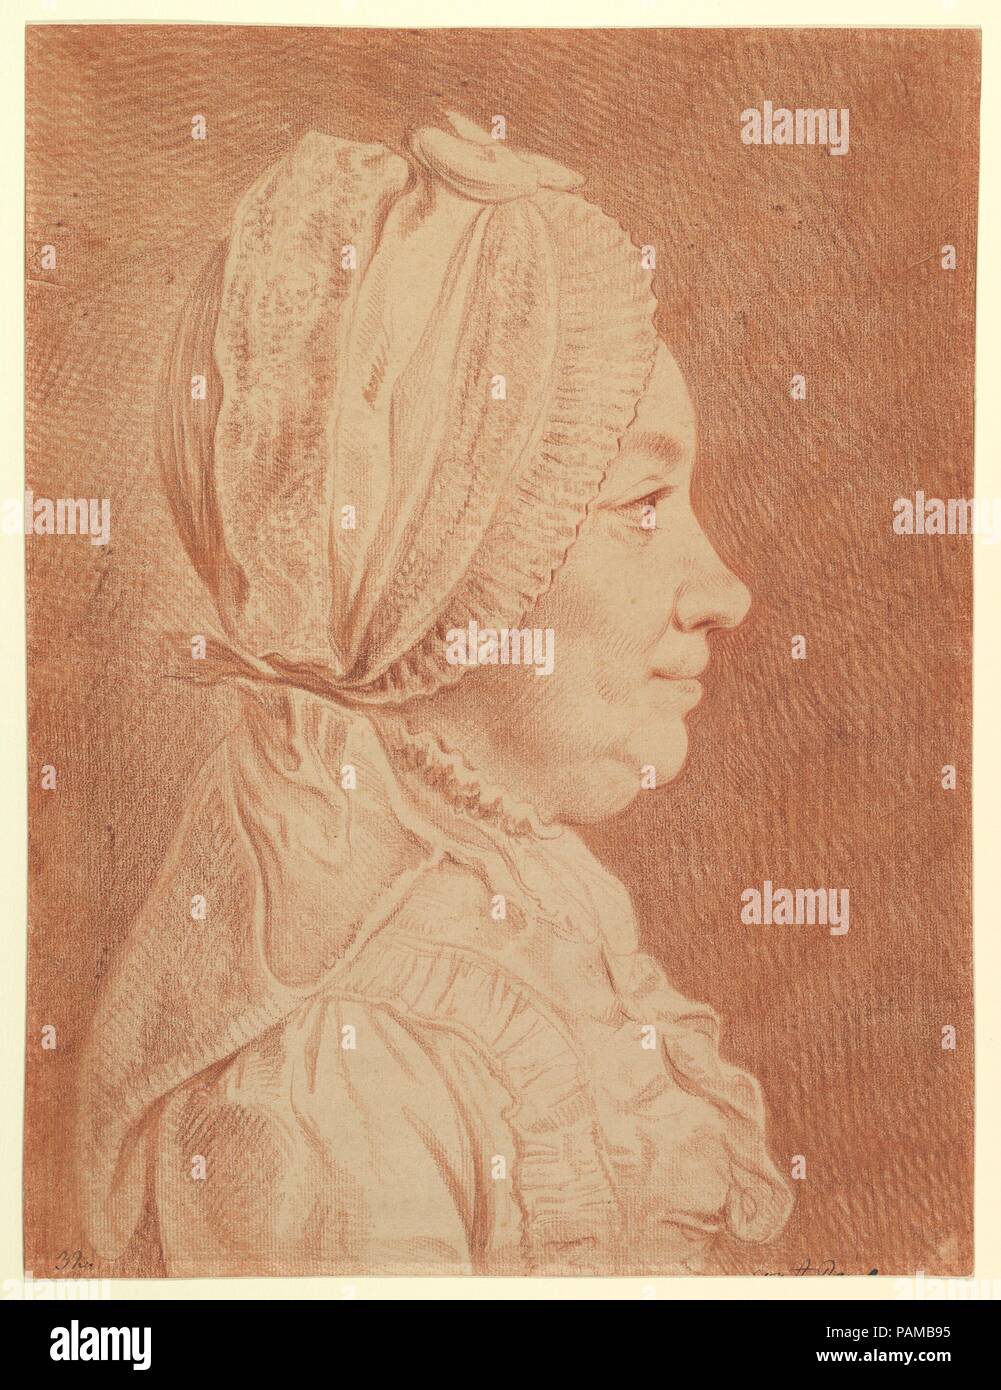 Portrait of the Artist's Wife. Artist: Daniel Nikolaus Chodowiecki (German, Danzig 1726-1801 Berlin). Dimensions: sheet: 19 11/16 x 14 3/4 in. (50 x 37.5 cm). Date: 18th century. Museum: Metropolitan Museum of Art, New York, USA. Stock Photo